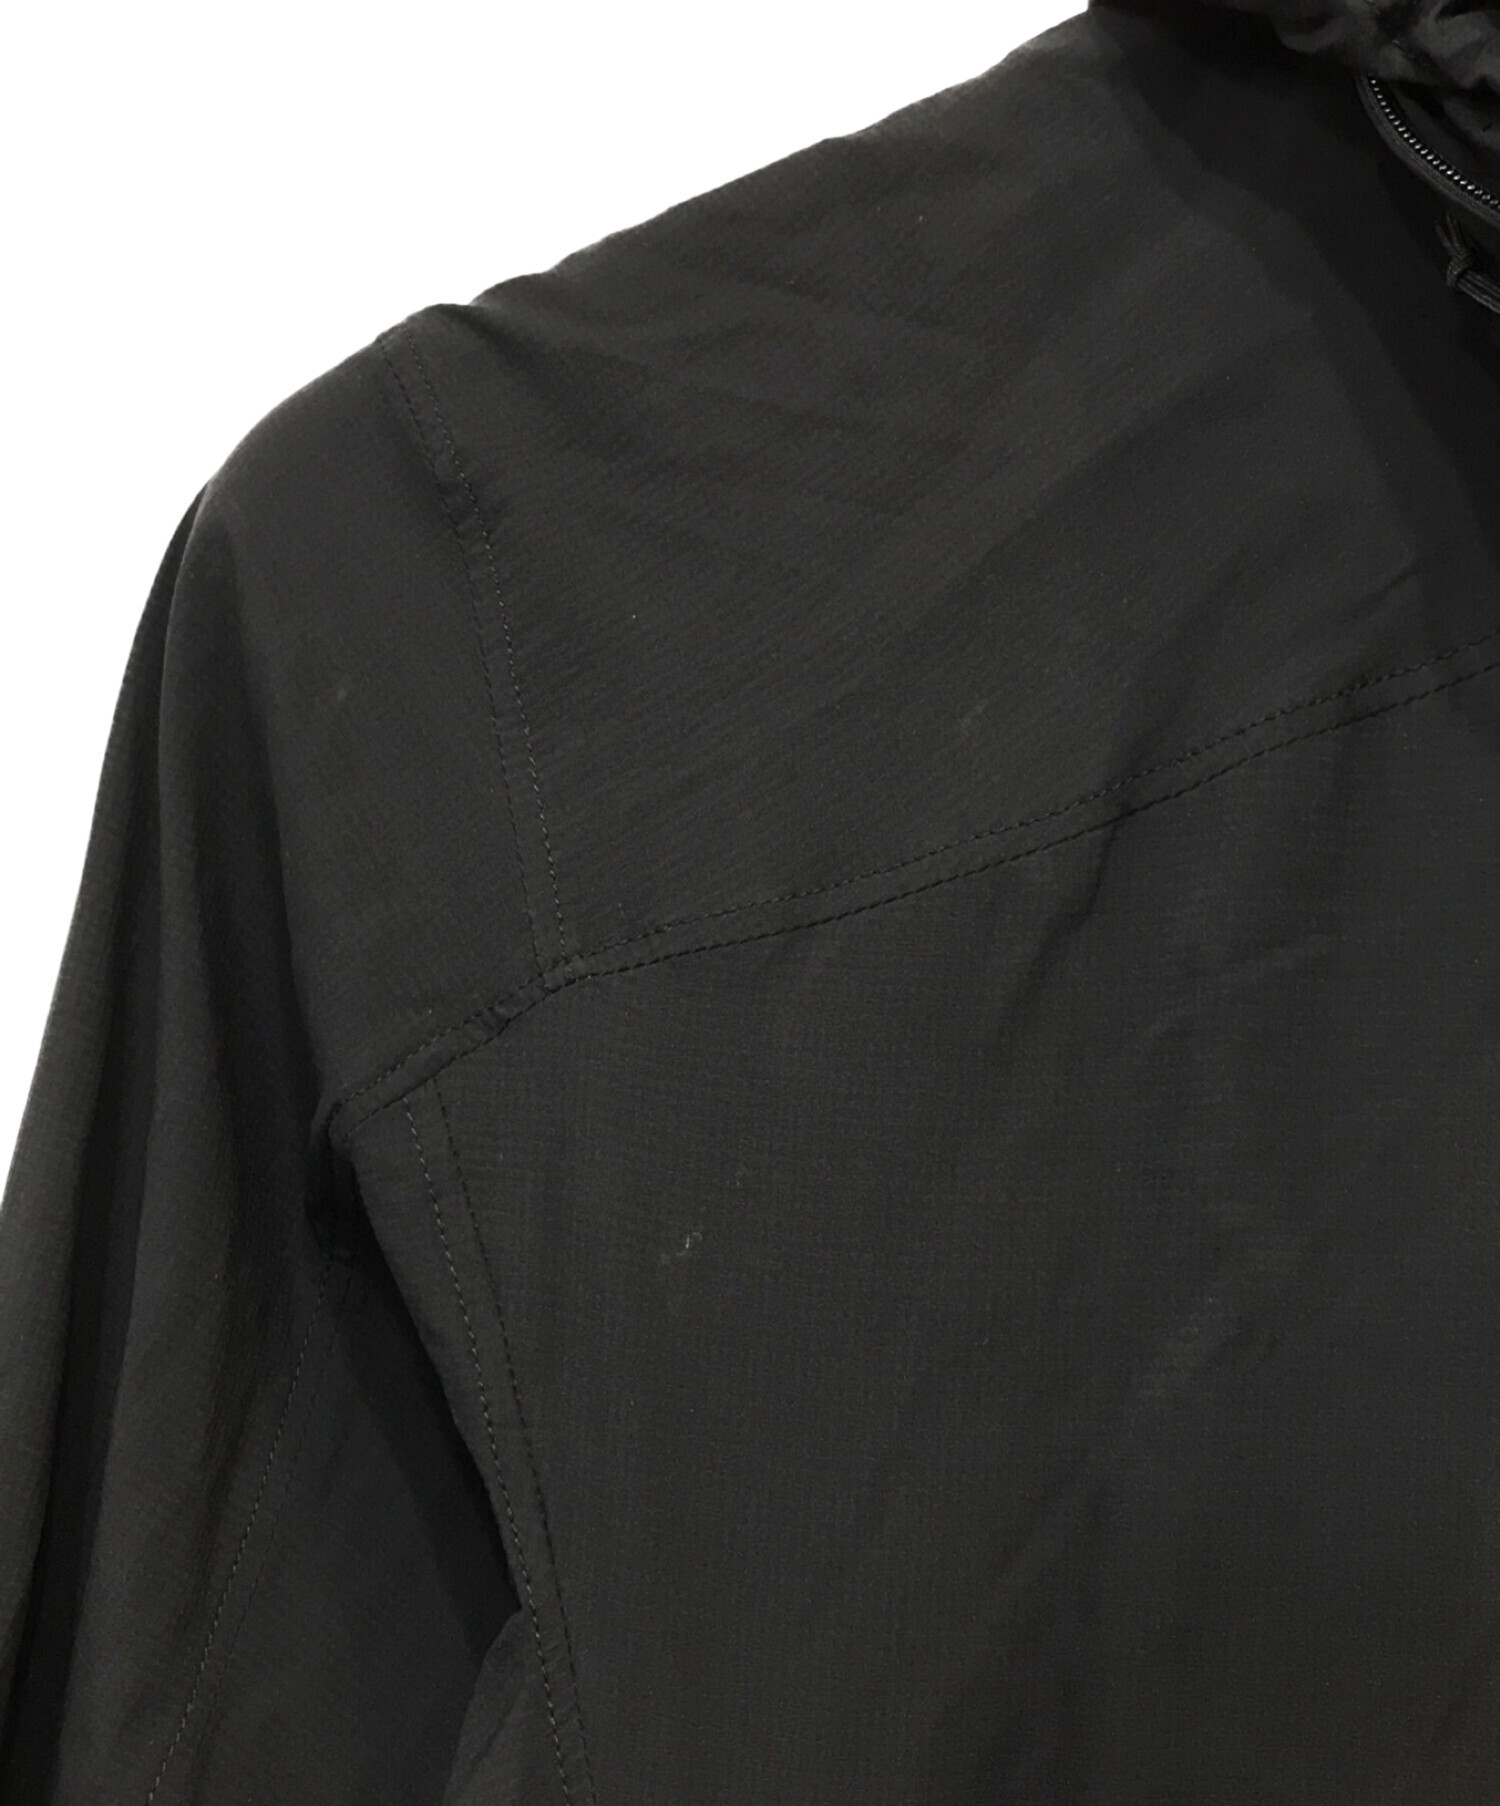 ARC'TERYX (アークテリクス) Nodin Jacket ブラック サイズ:XS